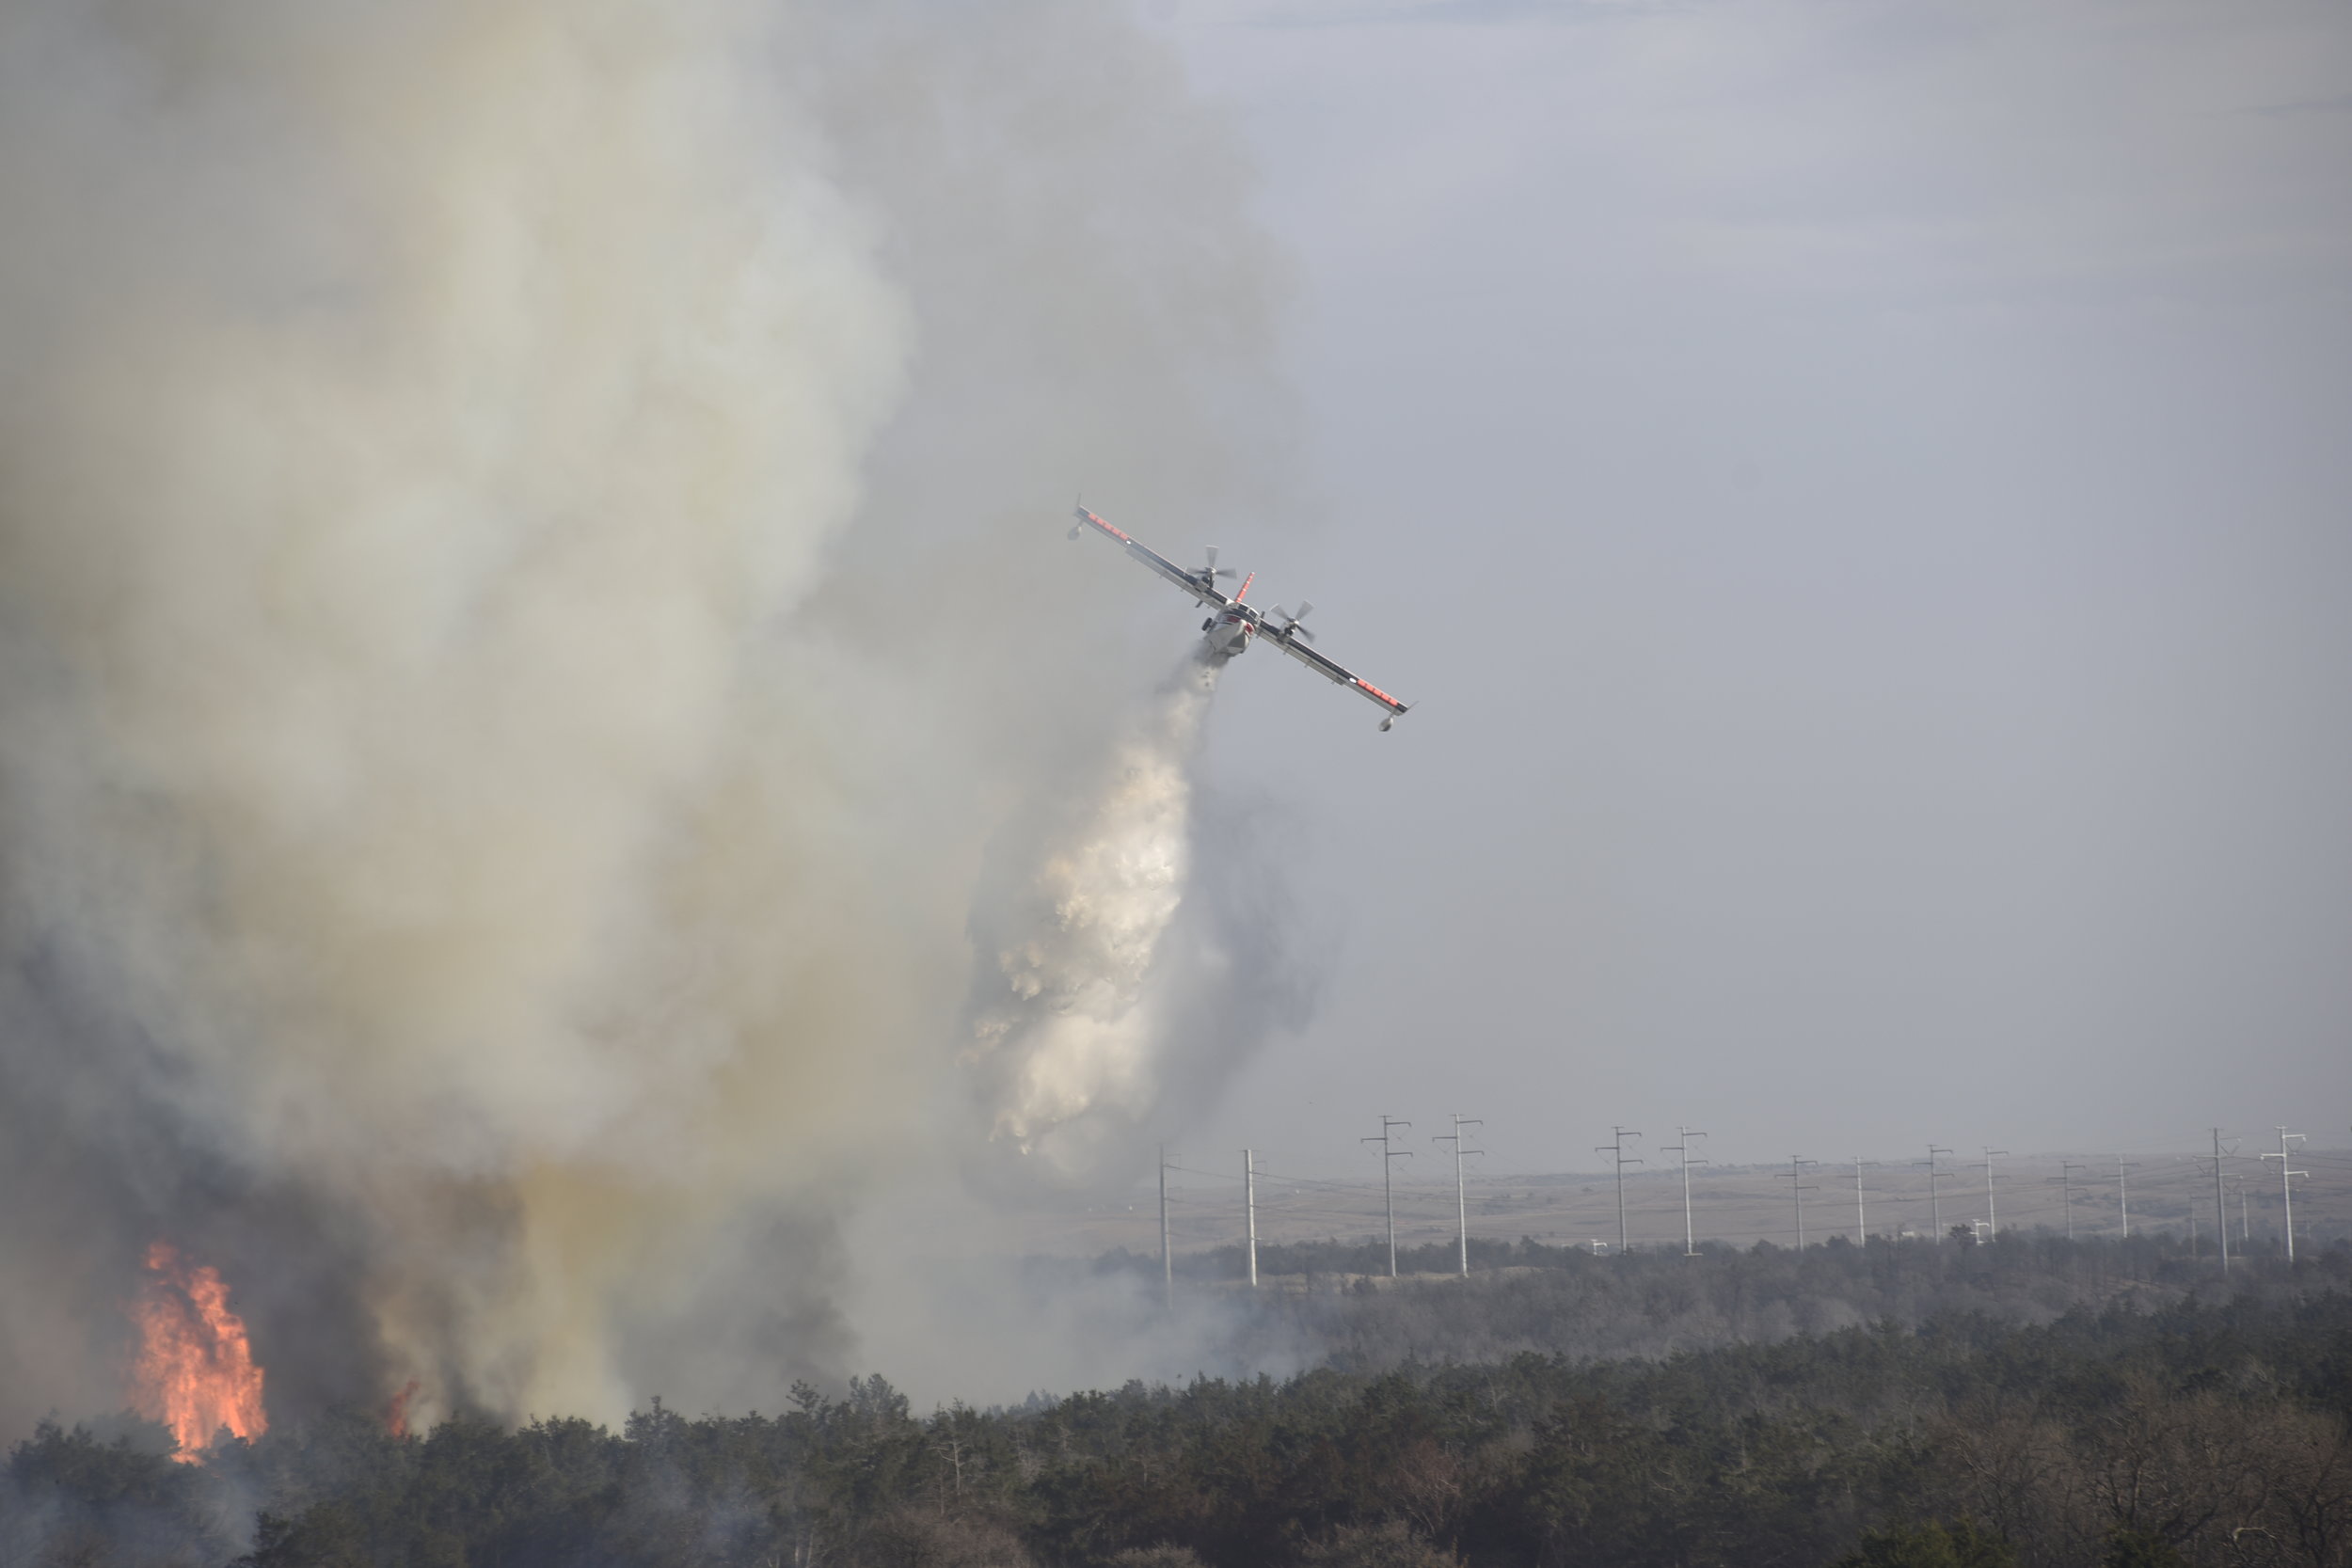  A plane makes a water drop on the Rhea Fire near Seiling, Oklahoma, U.S. April 17, 2018. REUTERS/Nick Oxford 